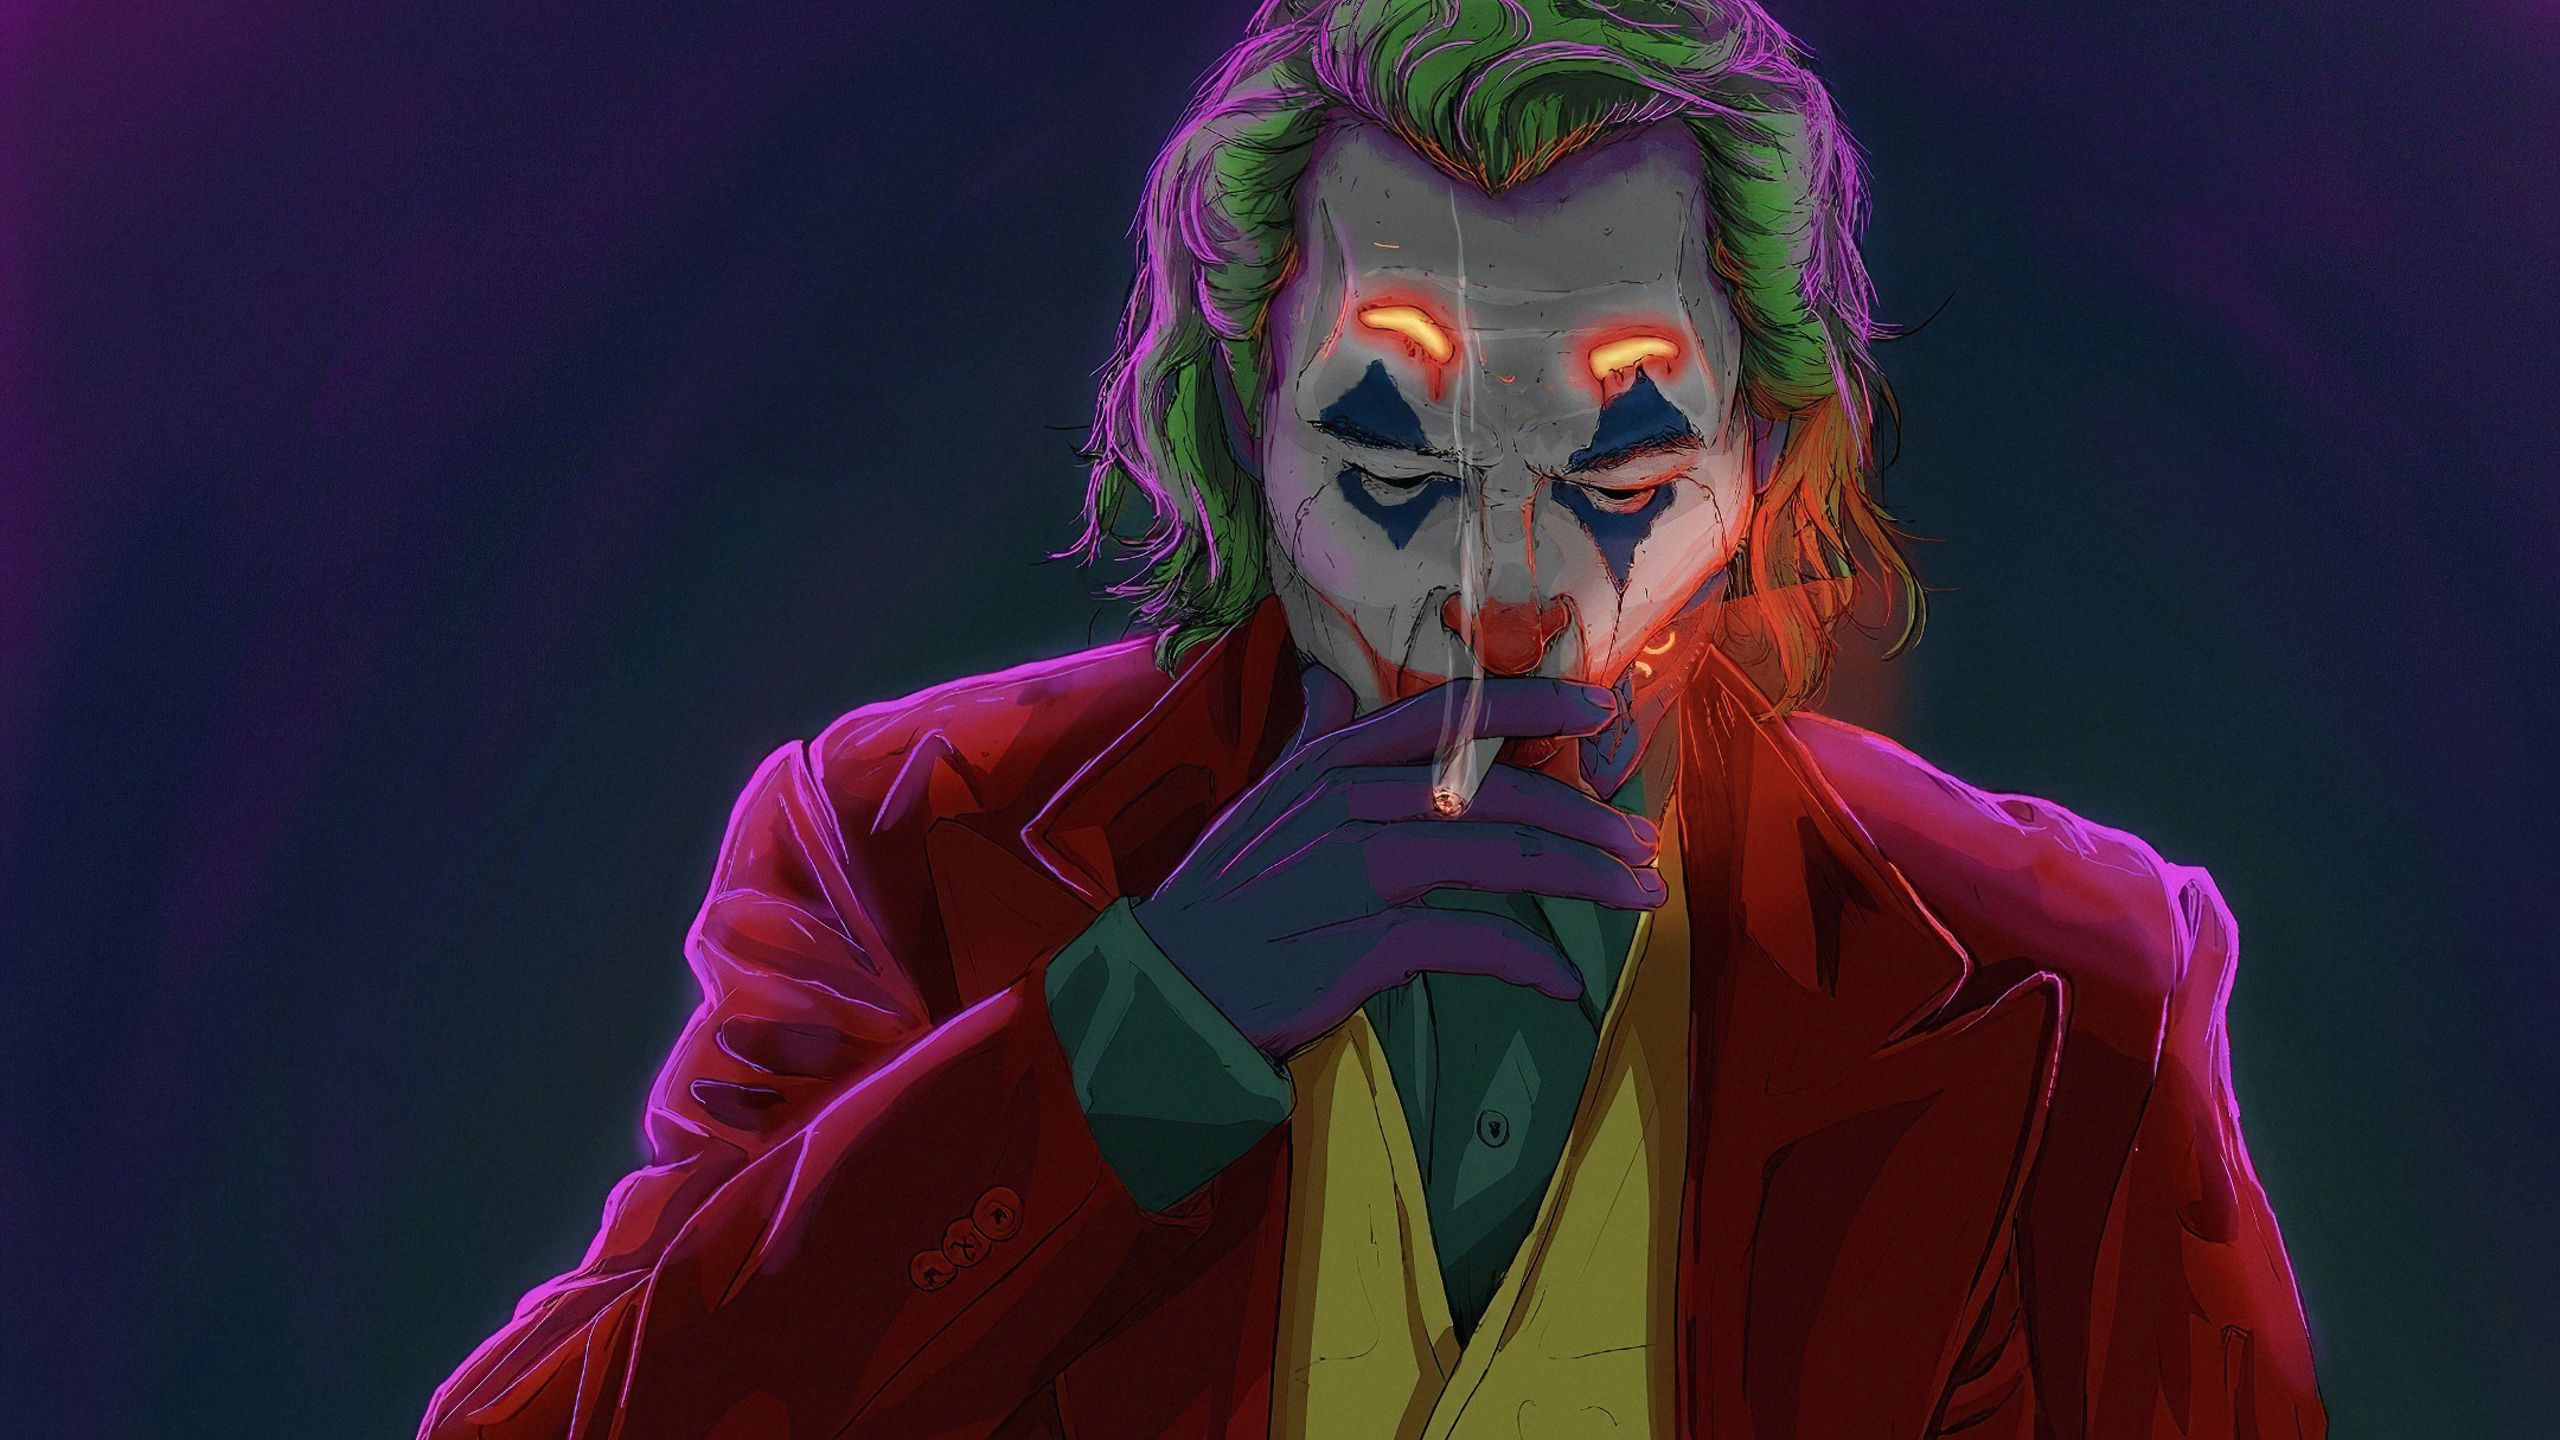 Joker Smoking Man 1440P Resolution HD 4k Wallpaper, Image, Background, Photo and Picture